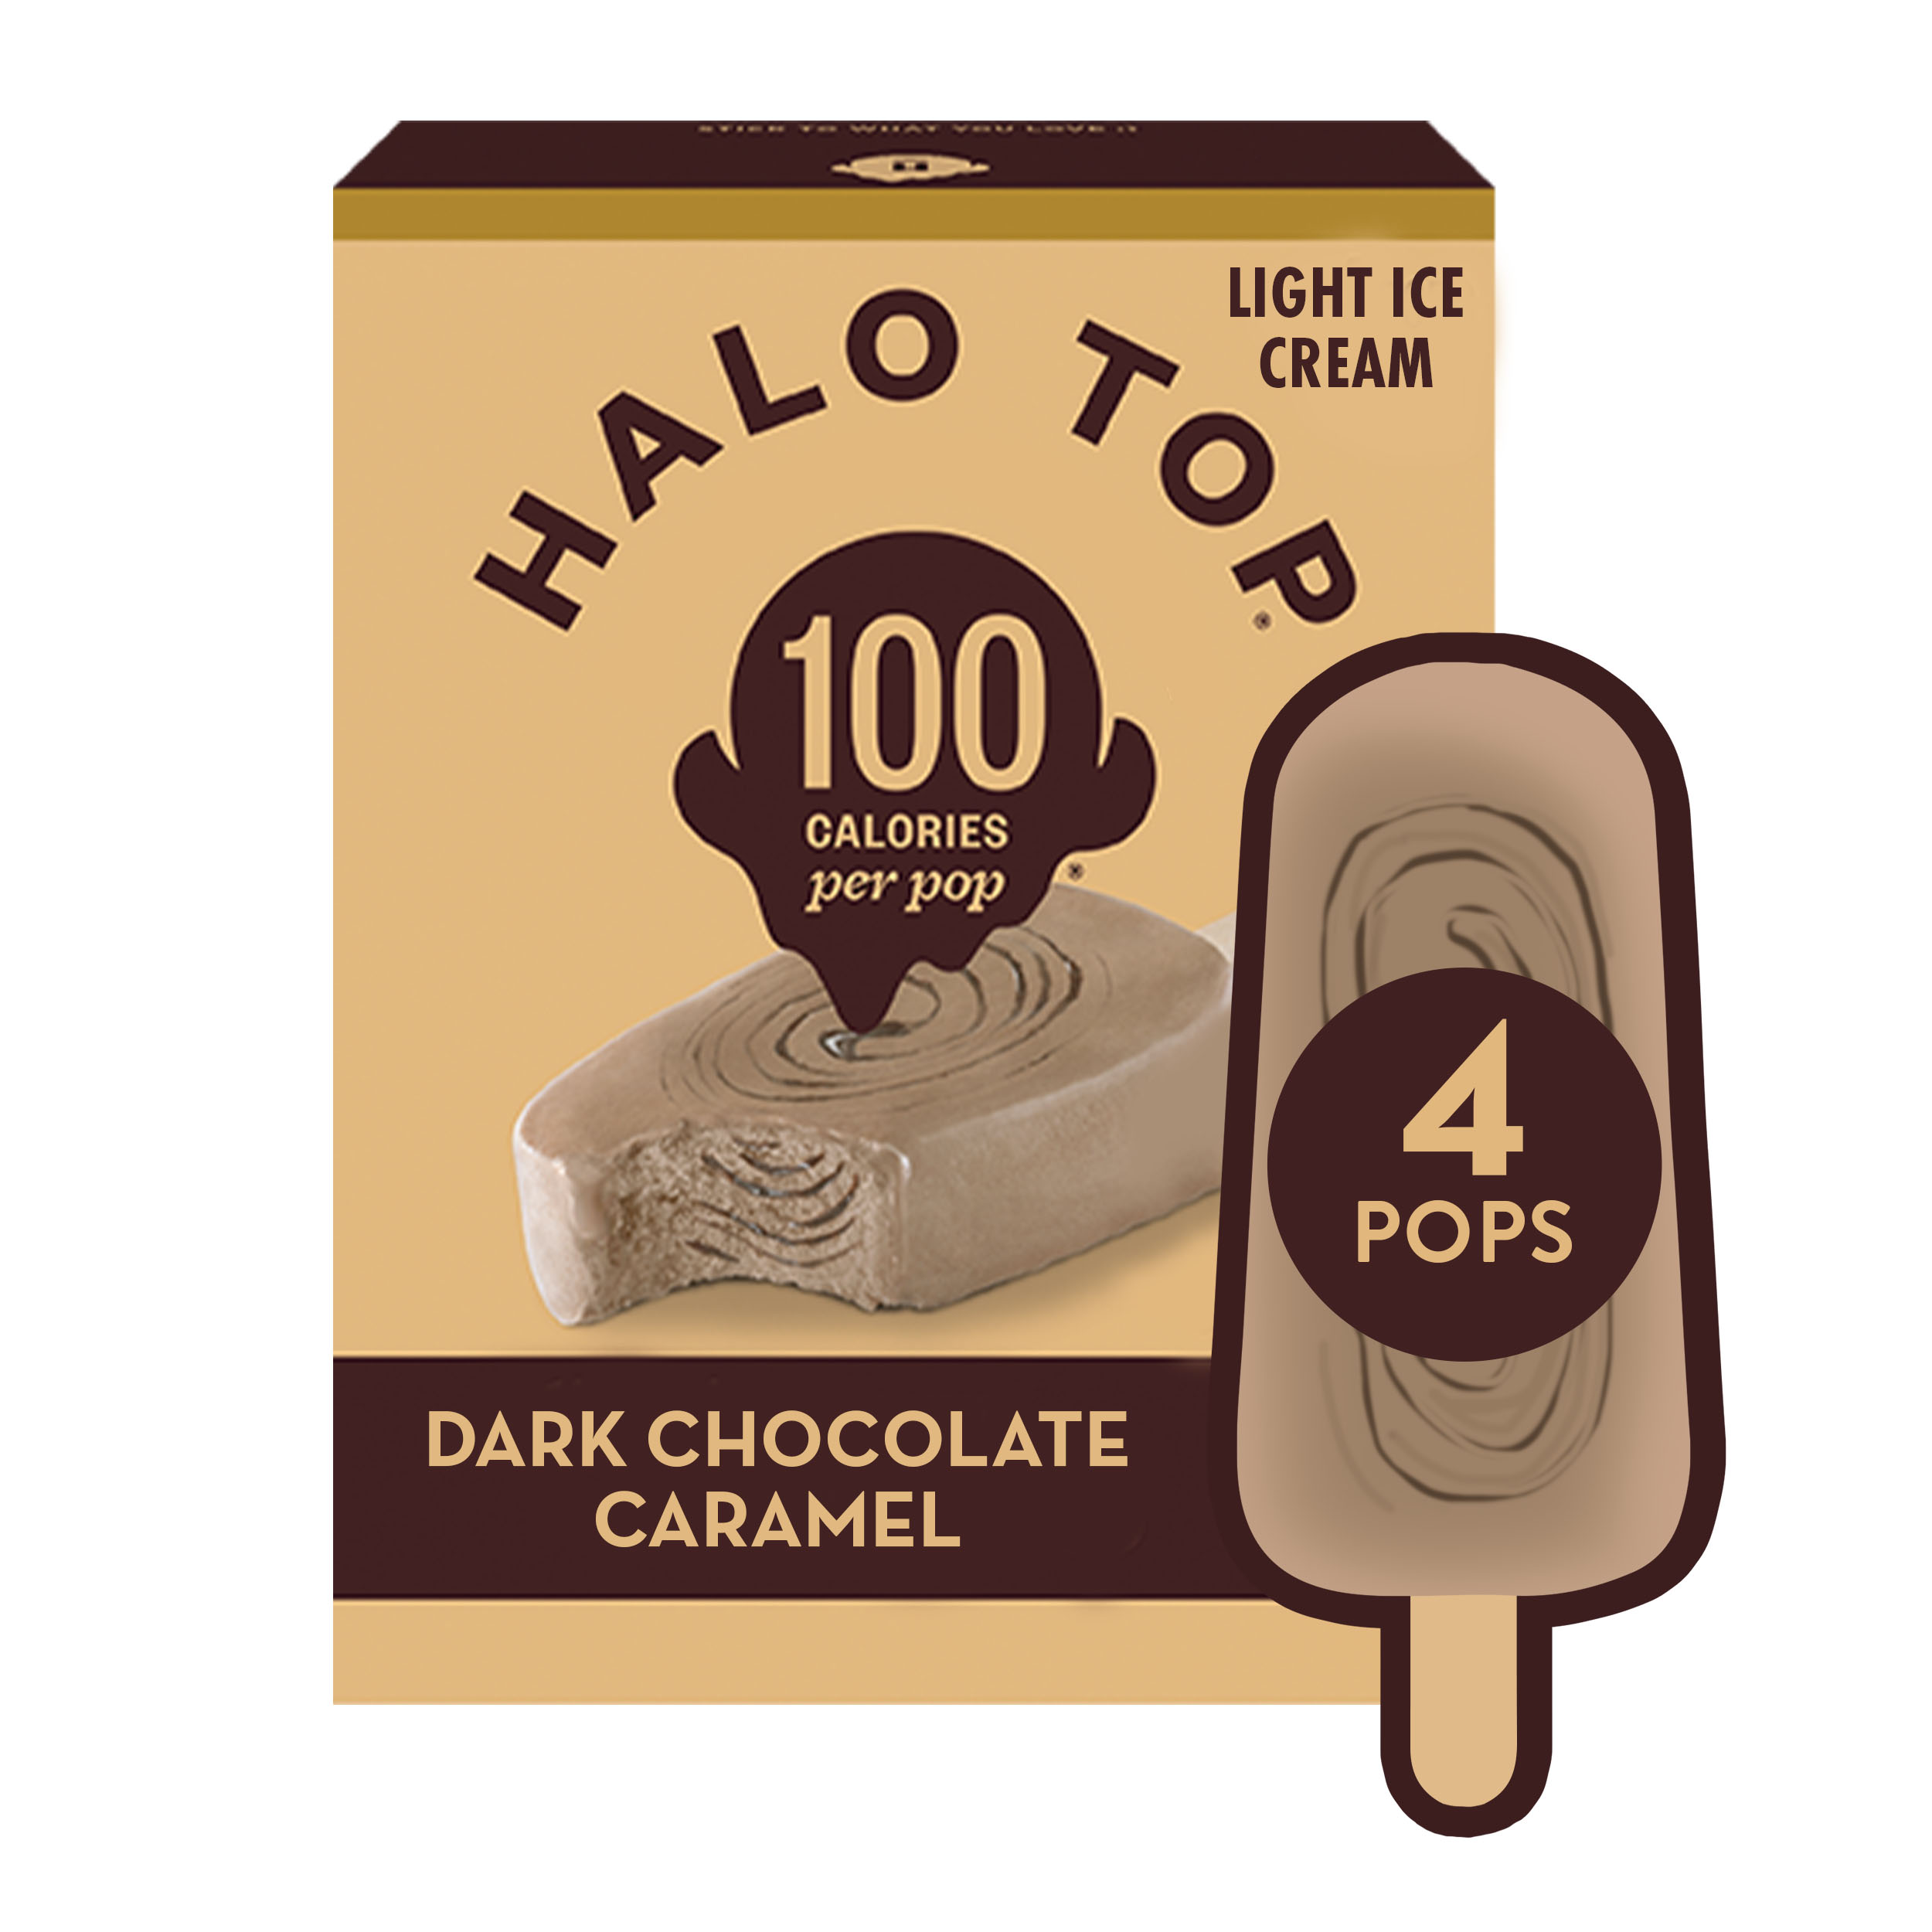 Halo Top Dark Chocolate Caramel Light Ice Cream Pops, 17.5 fl oz 4 Pack ...